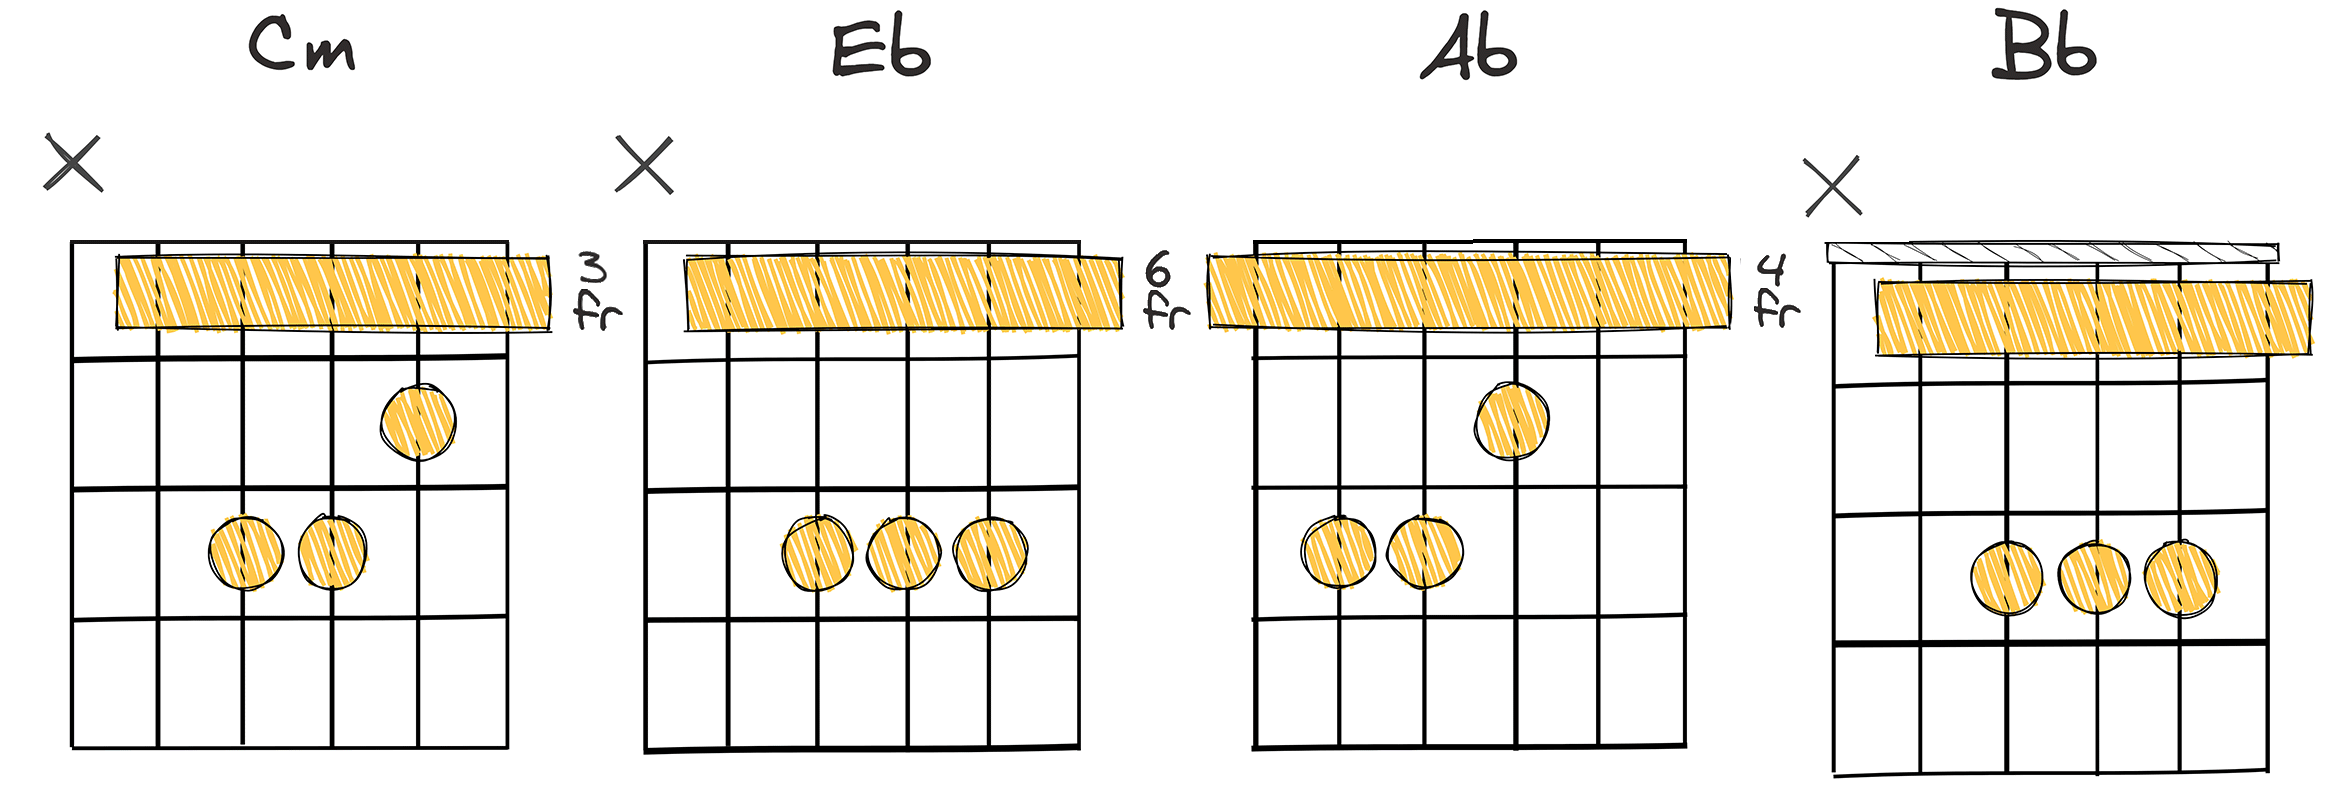 i-III-VI-VII (1-3-6-7) chords diagram